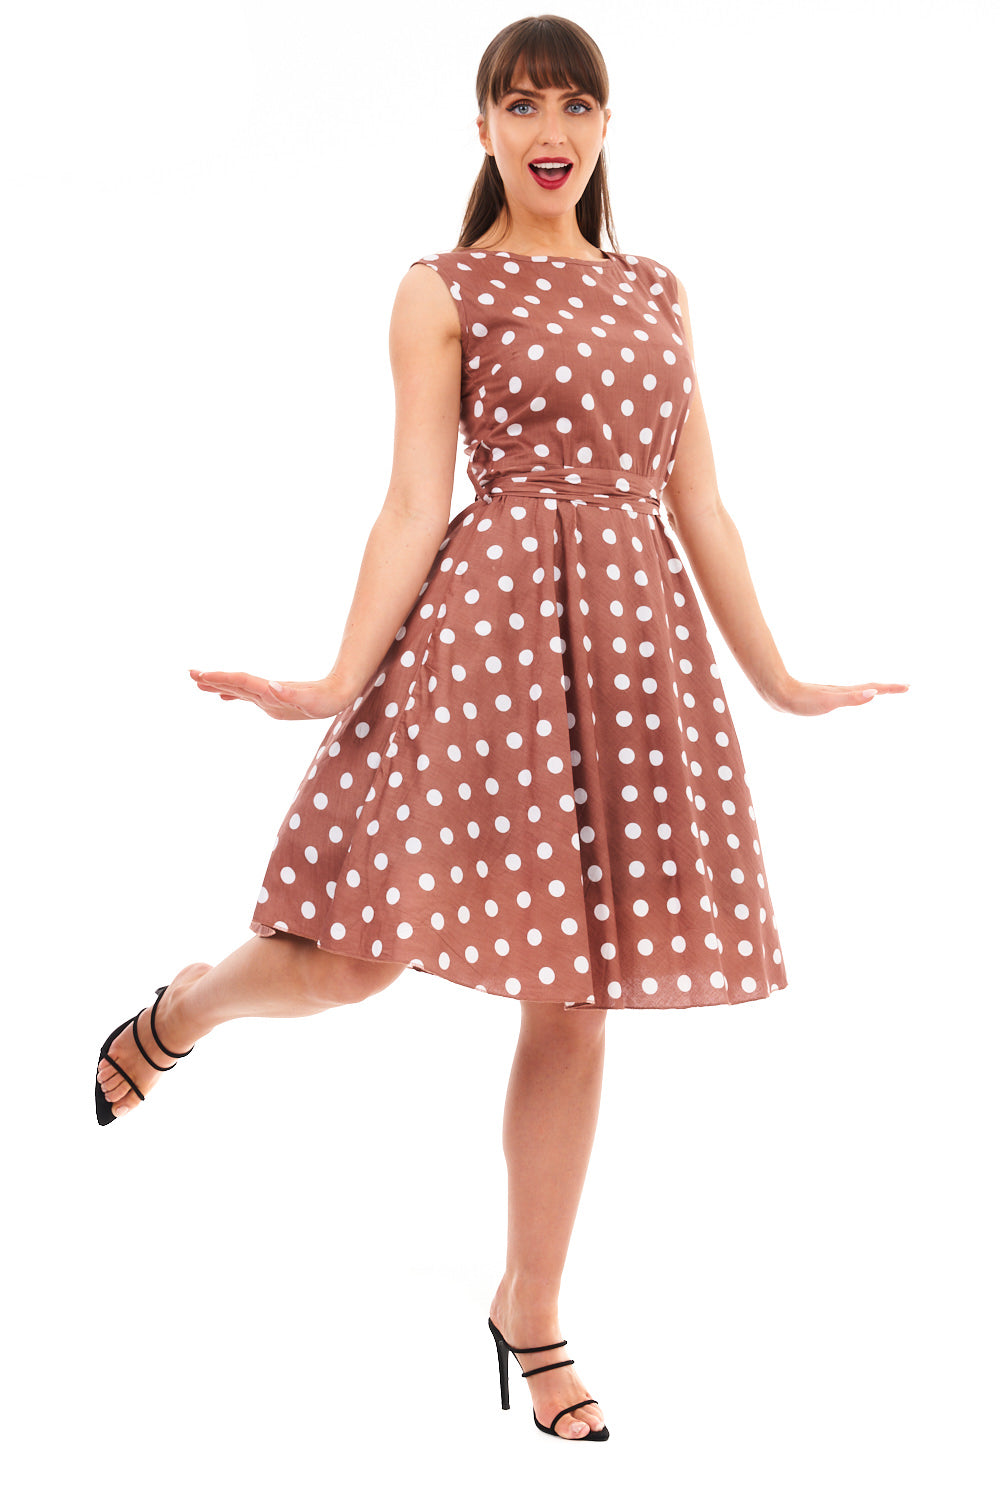 Ladies Retro Vintage 1940's /1950s Inspired Polka Dot Dress in Beige